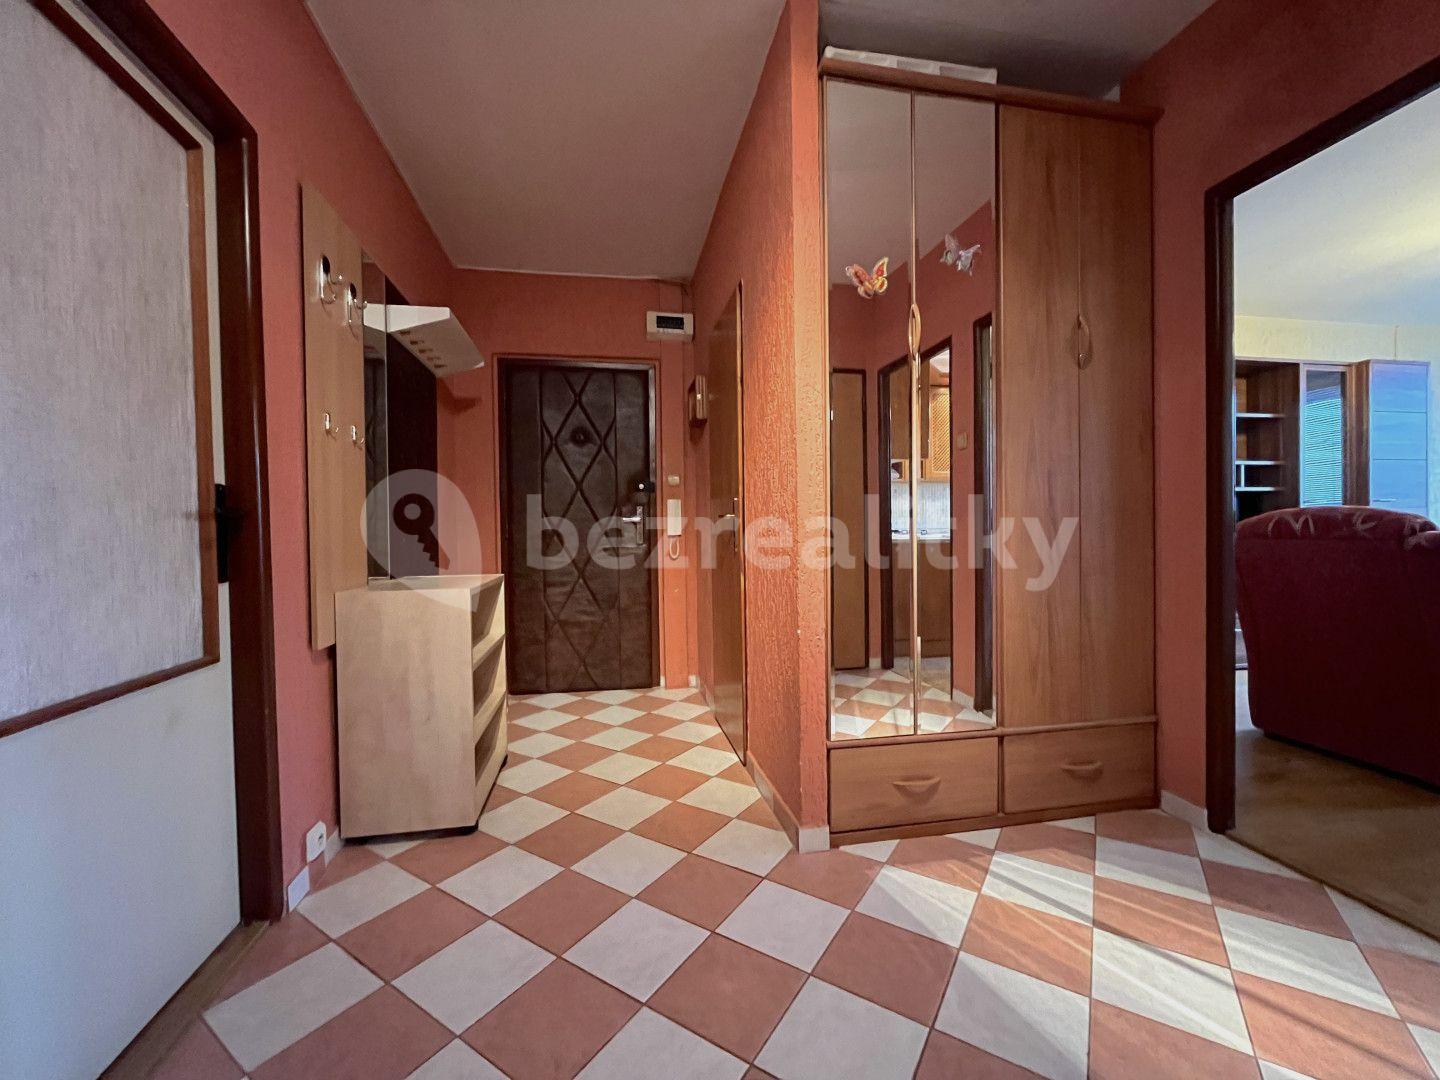 3 bedroom flat for sale, 70 m², Janouchova, Prague, Prague